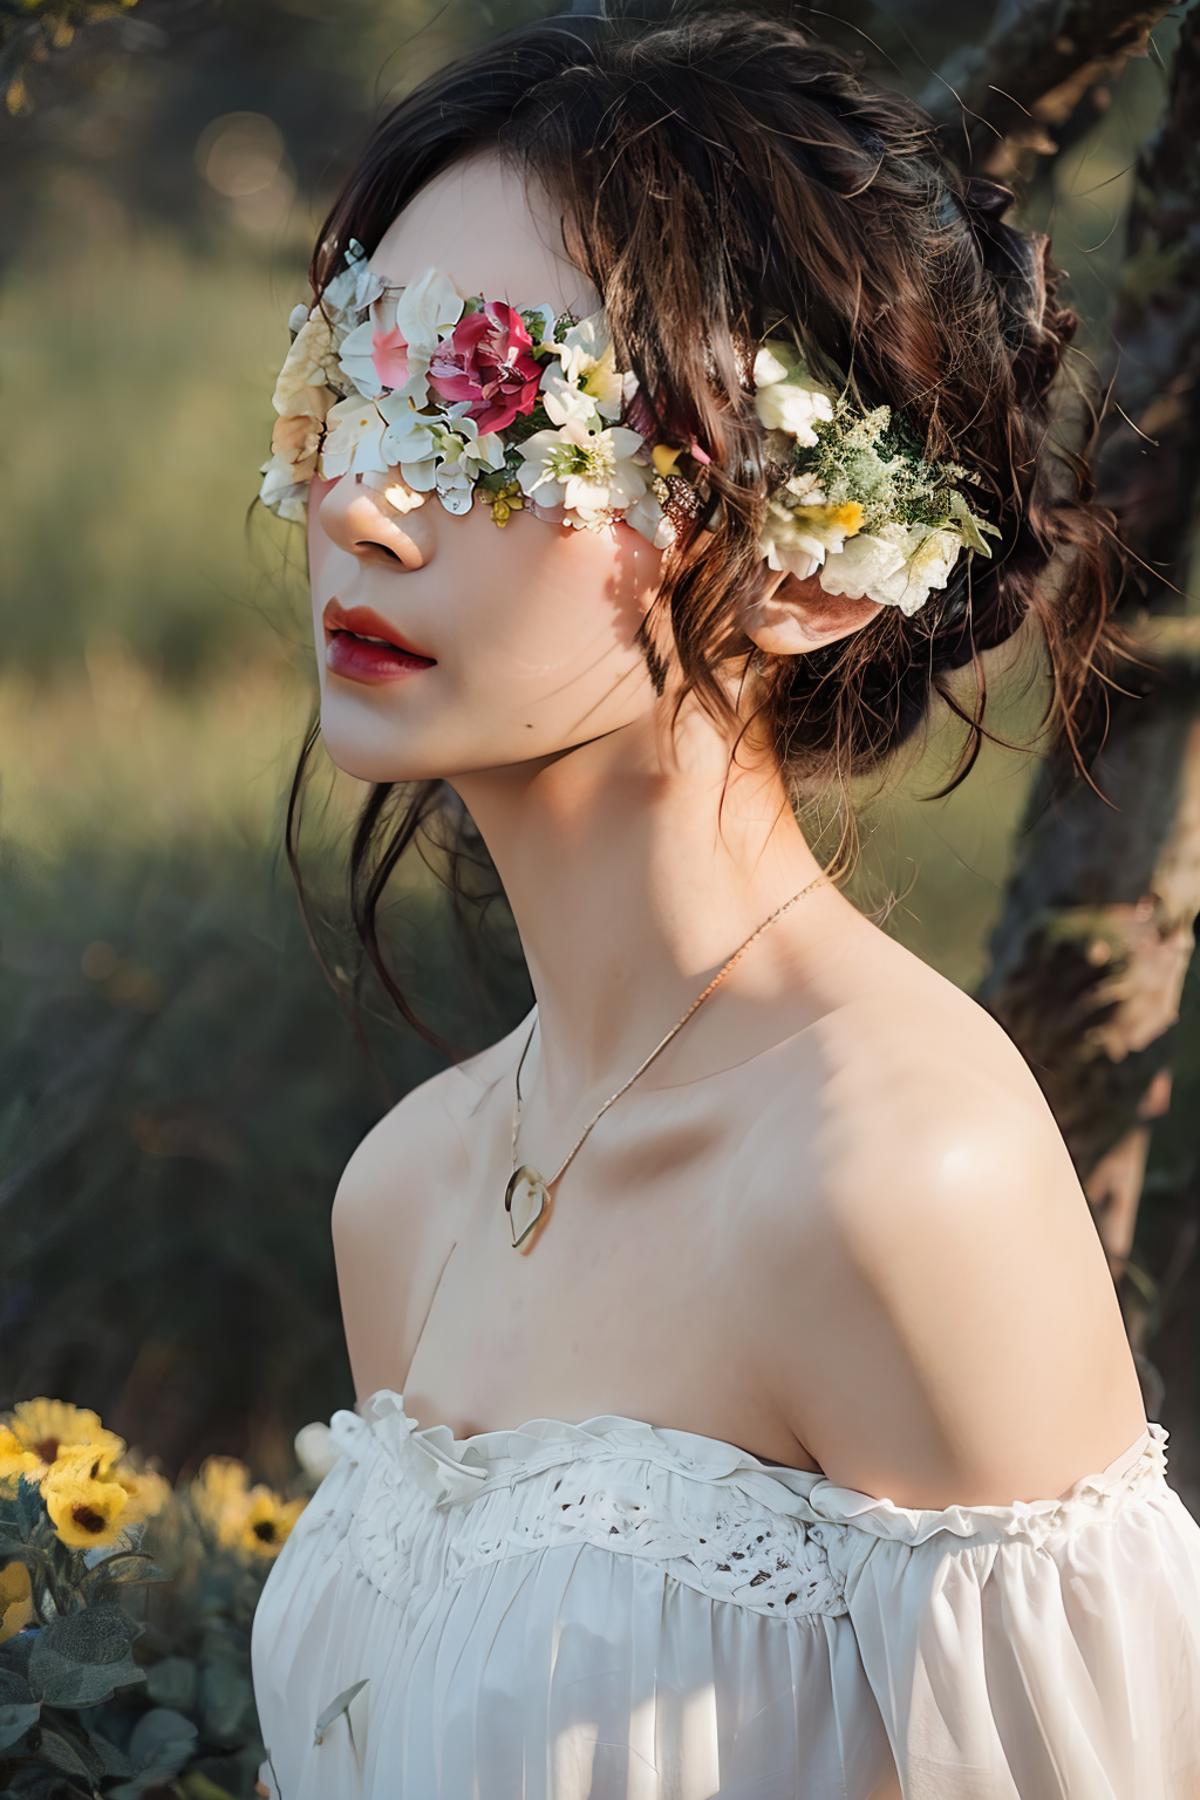 Flower Blindfold | 花眼罩 | 花の目隠し | Sora SD1.5 image by SoraSleep